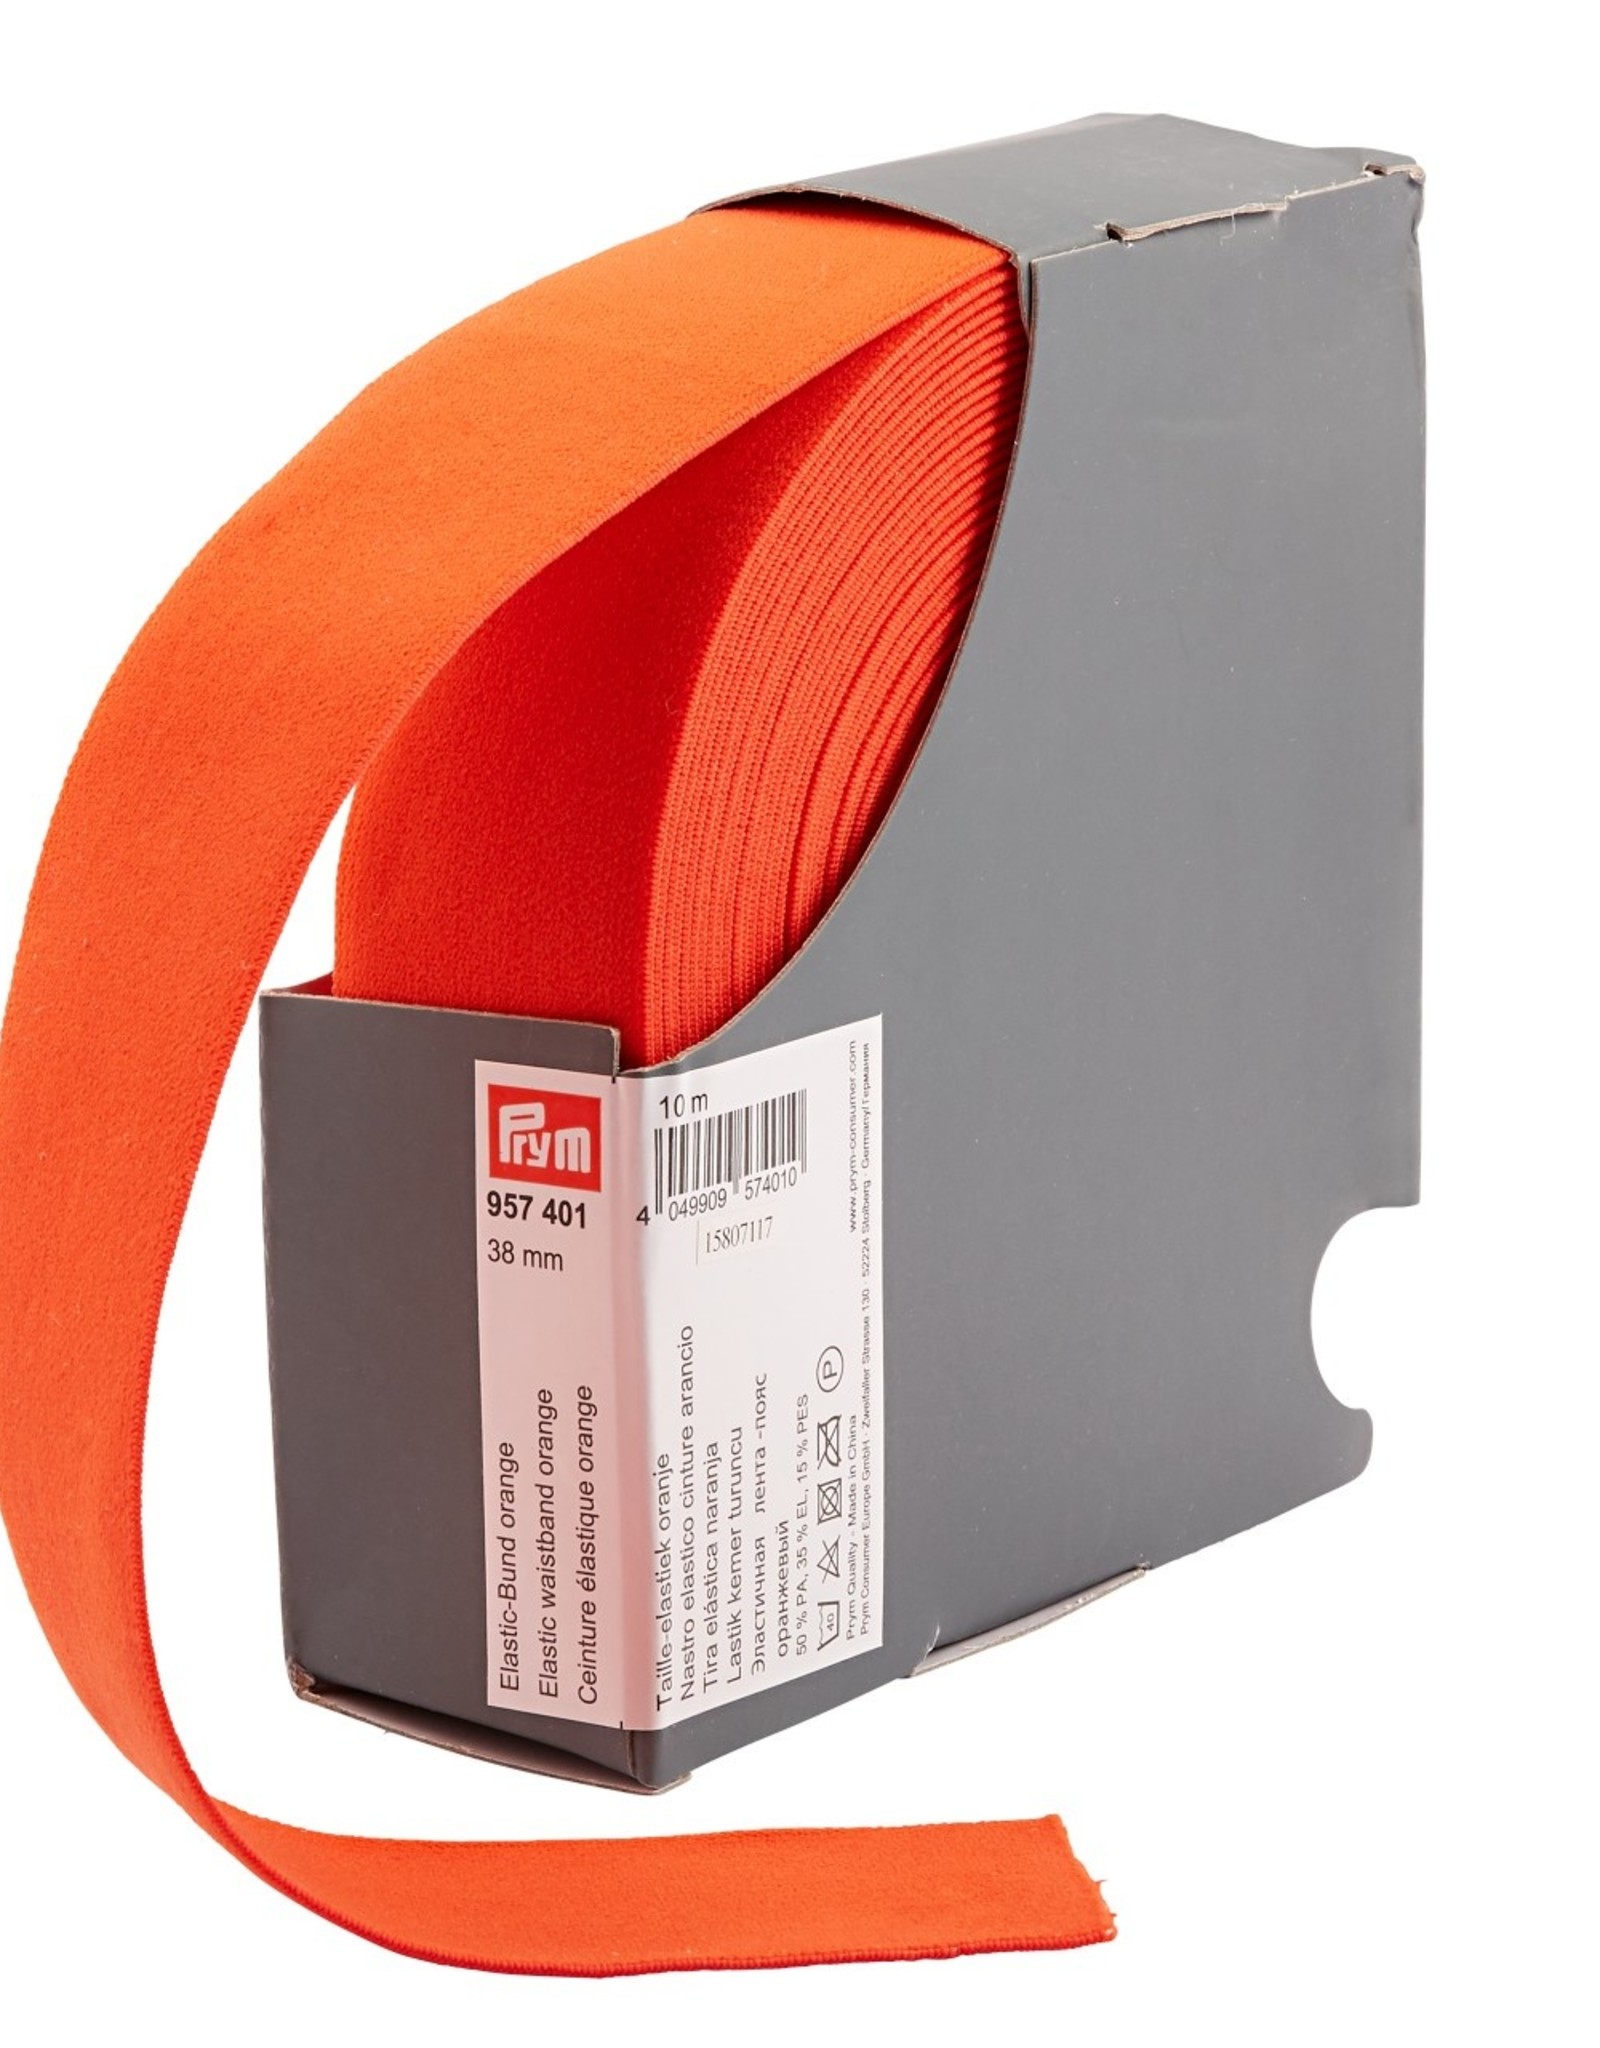 Prym Prym - Taille elastiek uni oranje 38mm - 957 401